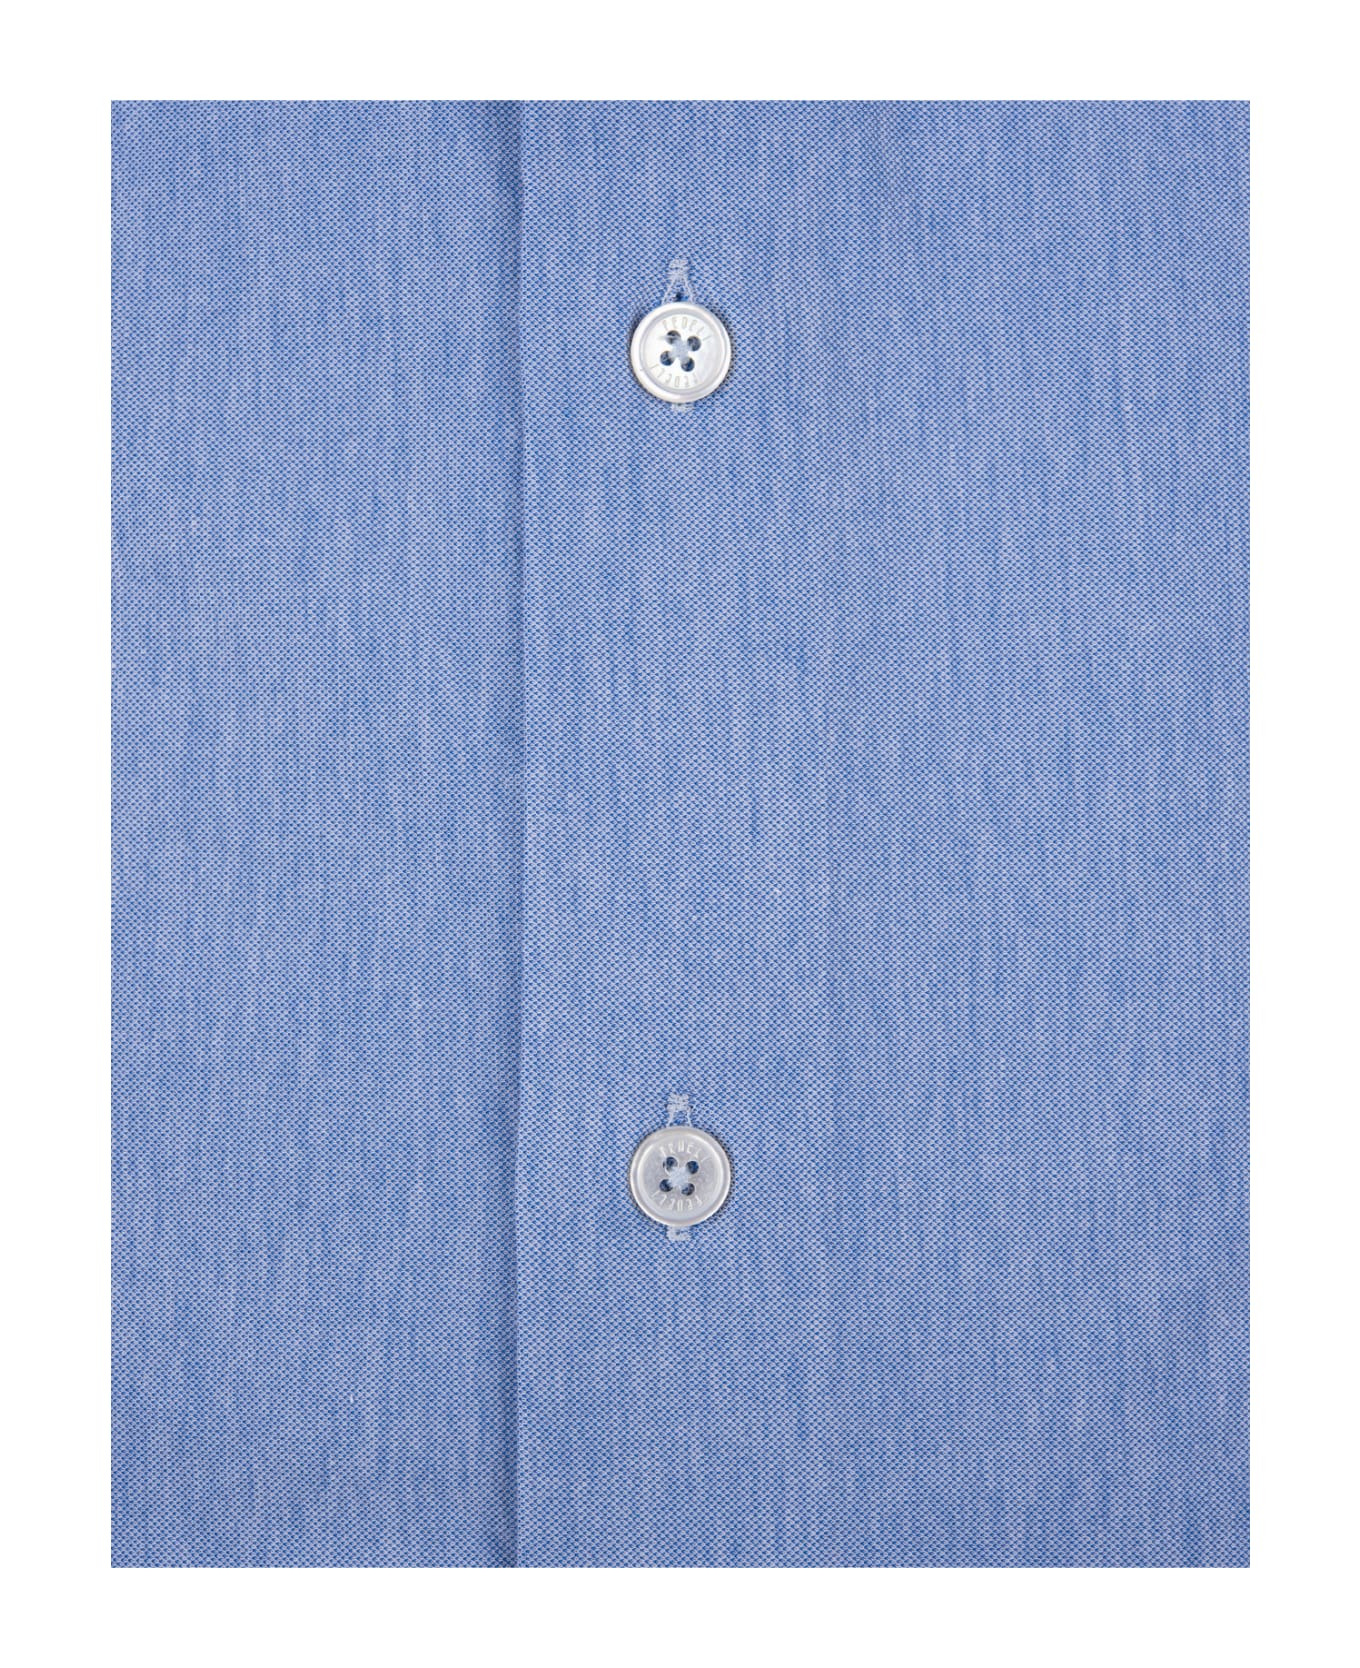 Fedeli Blue Strech Shirt - Blue シャツ